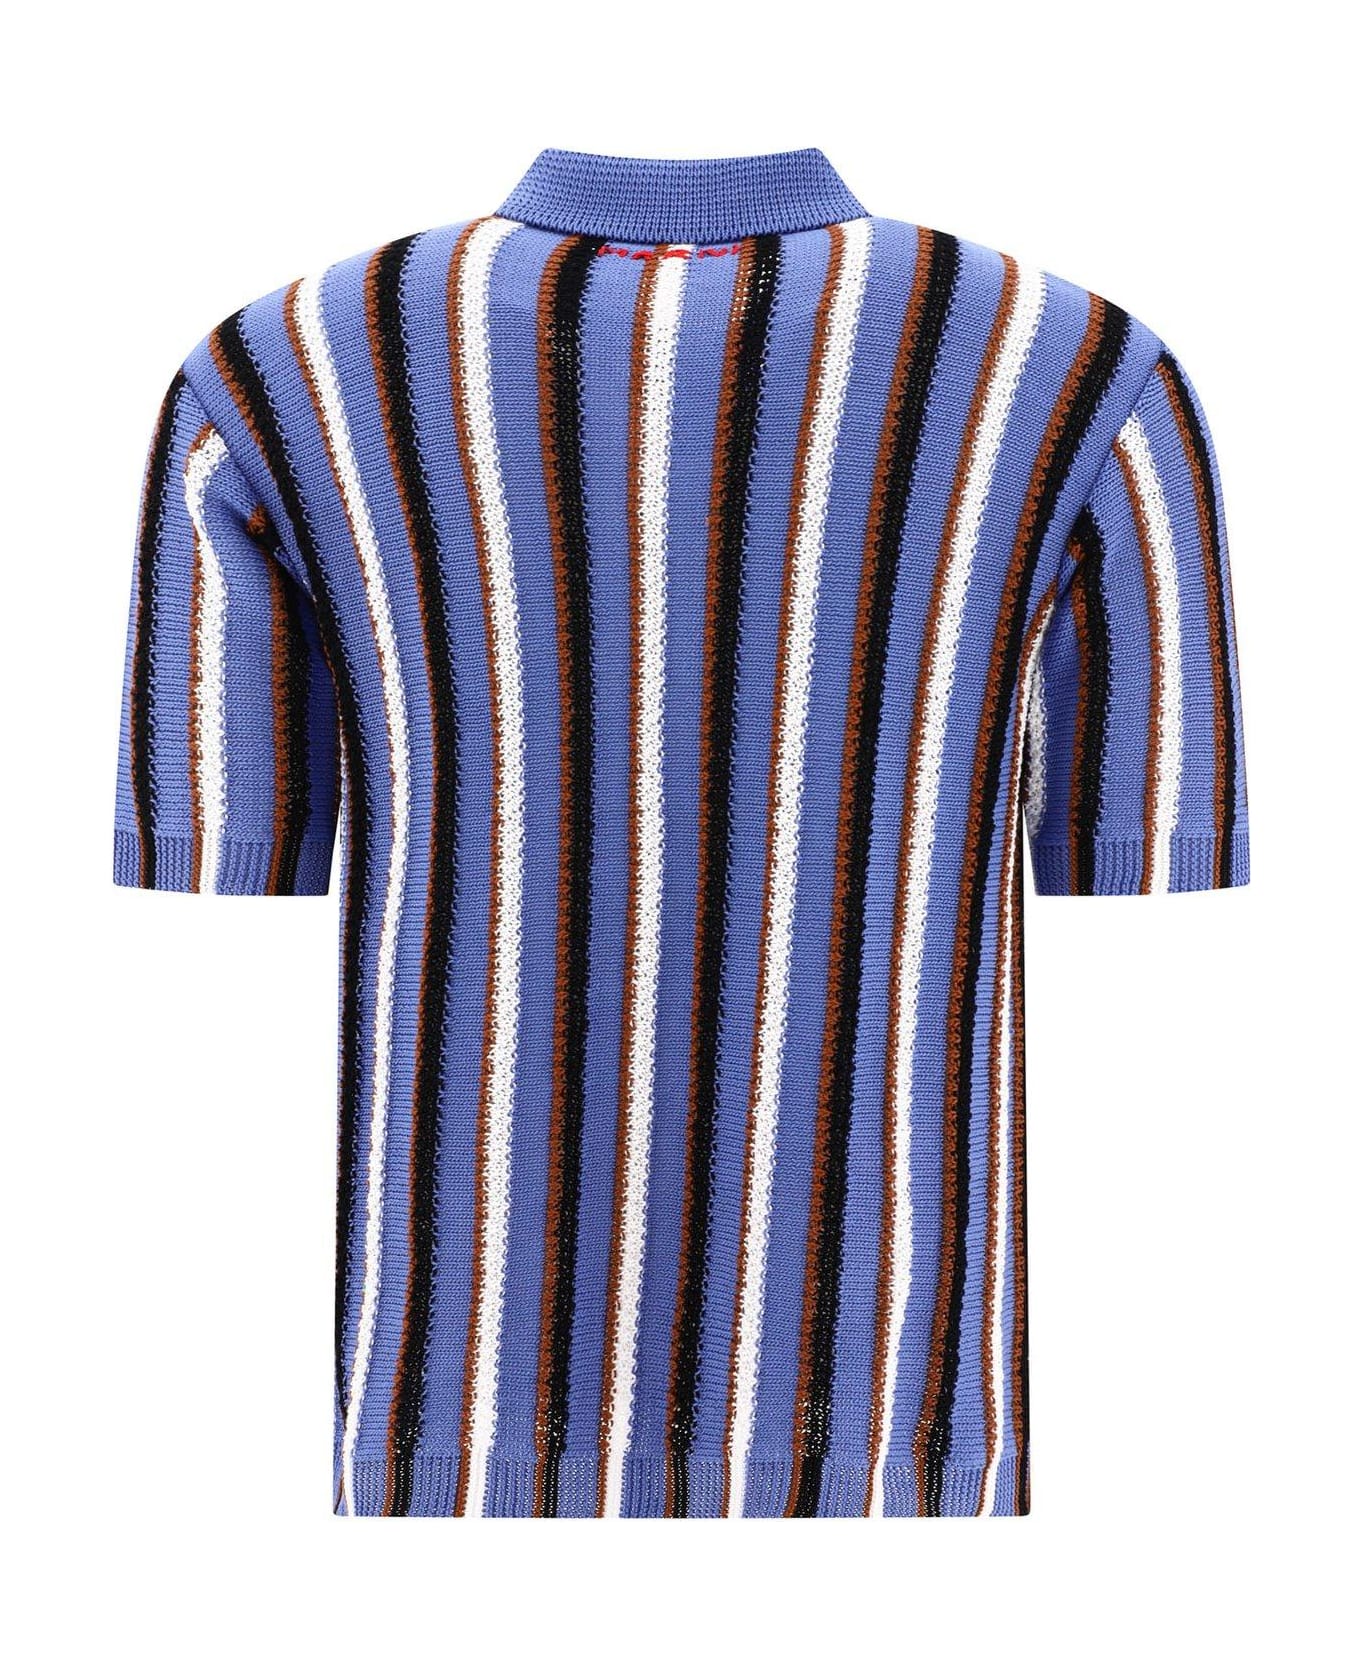 Marni Striped Crocheted Polo Shirt - Azzurro